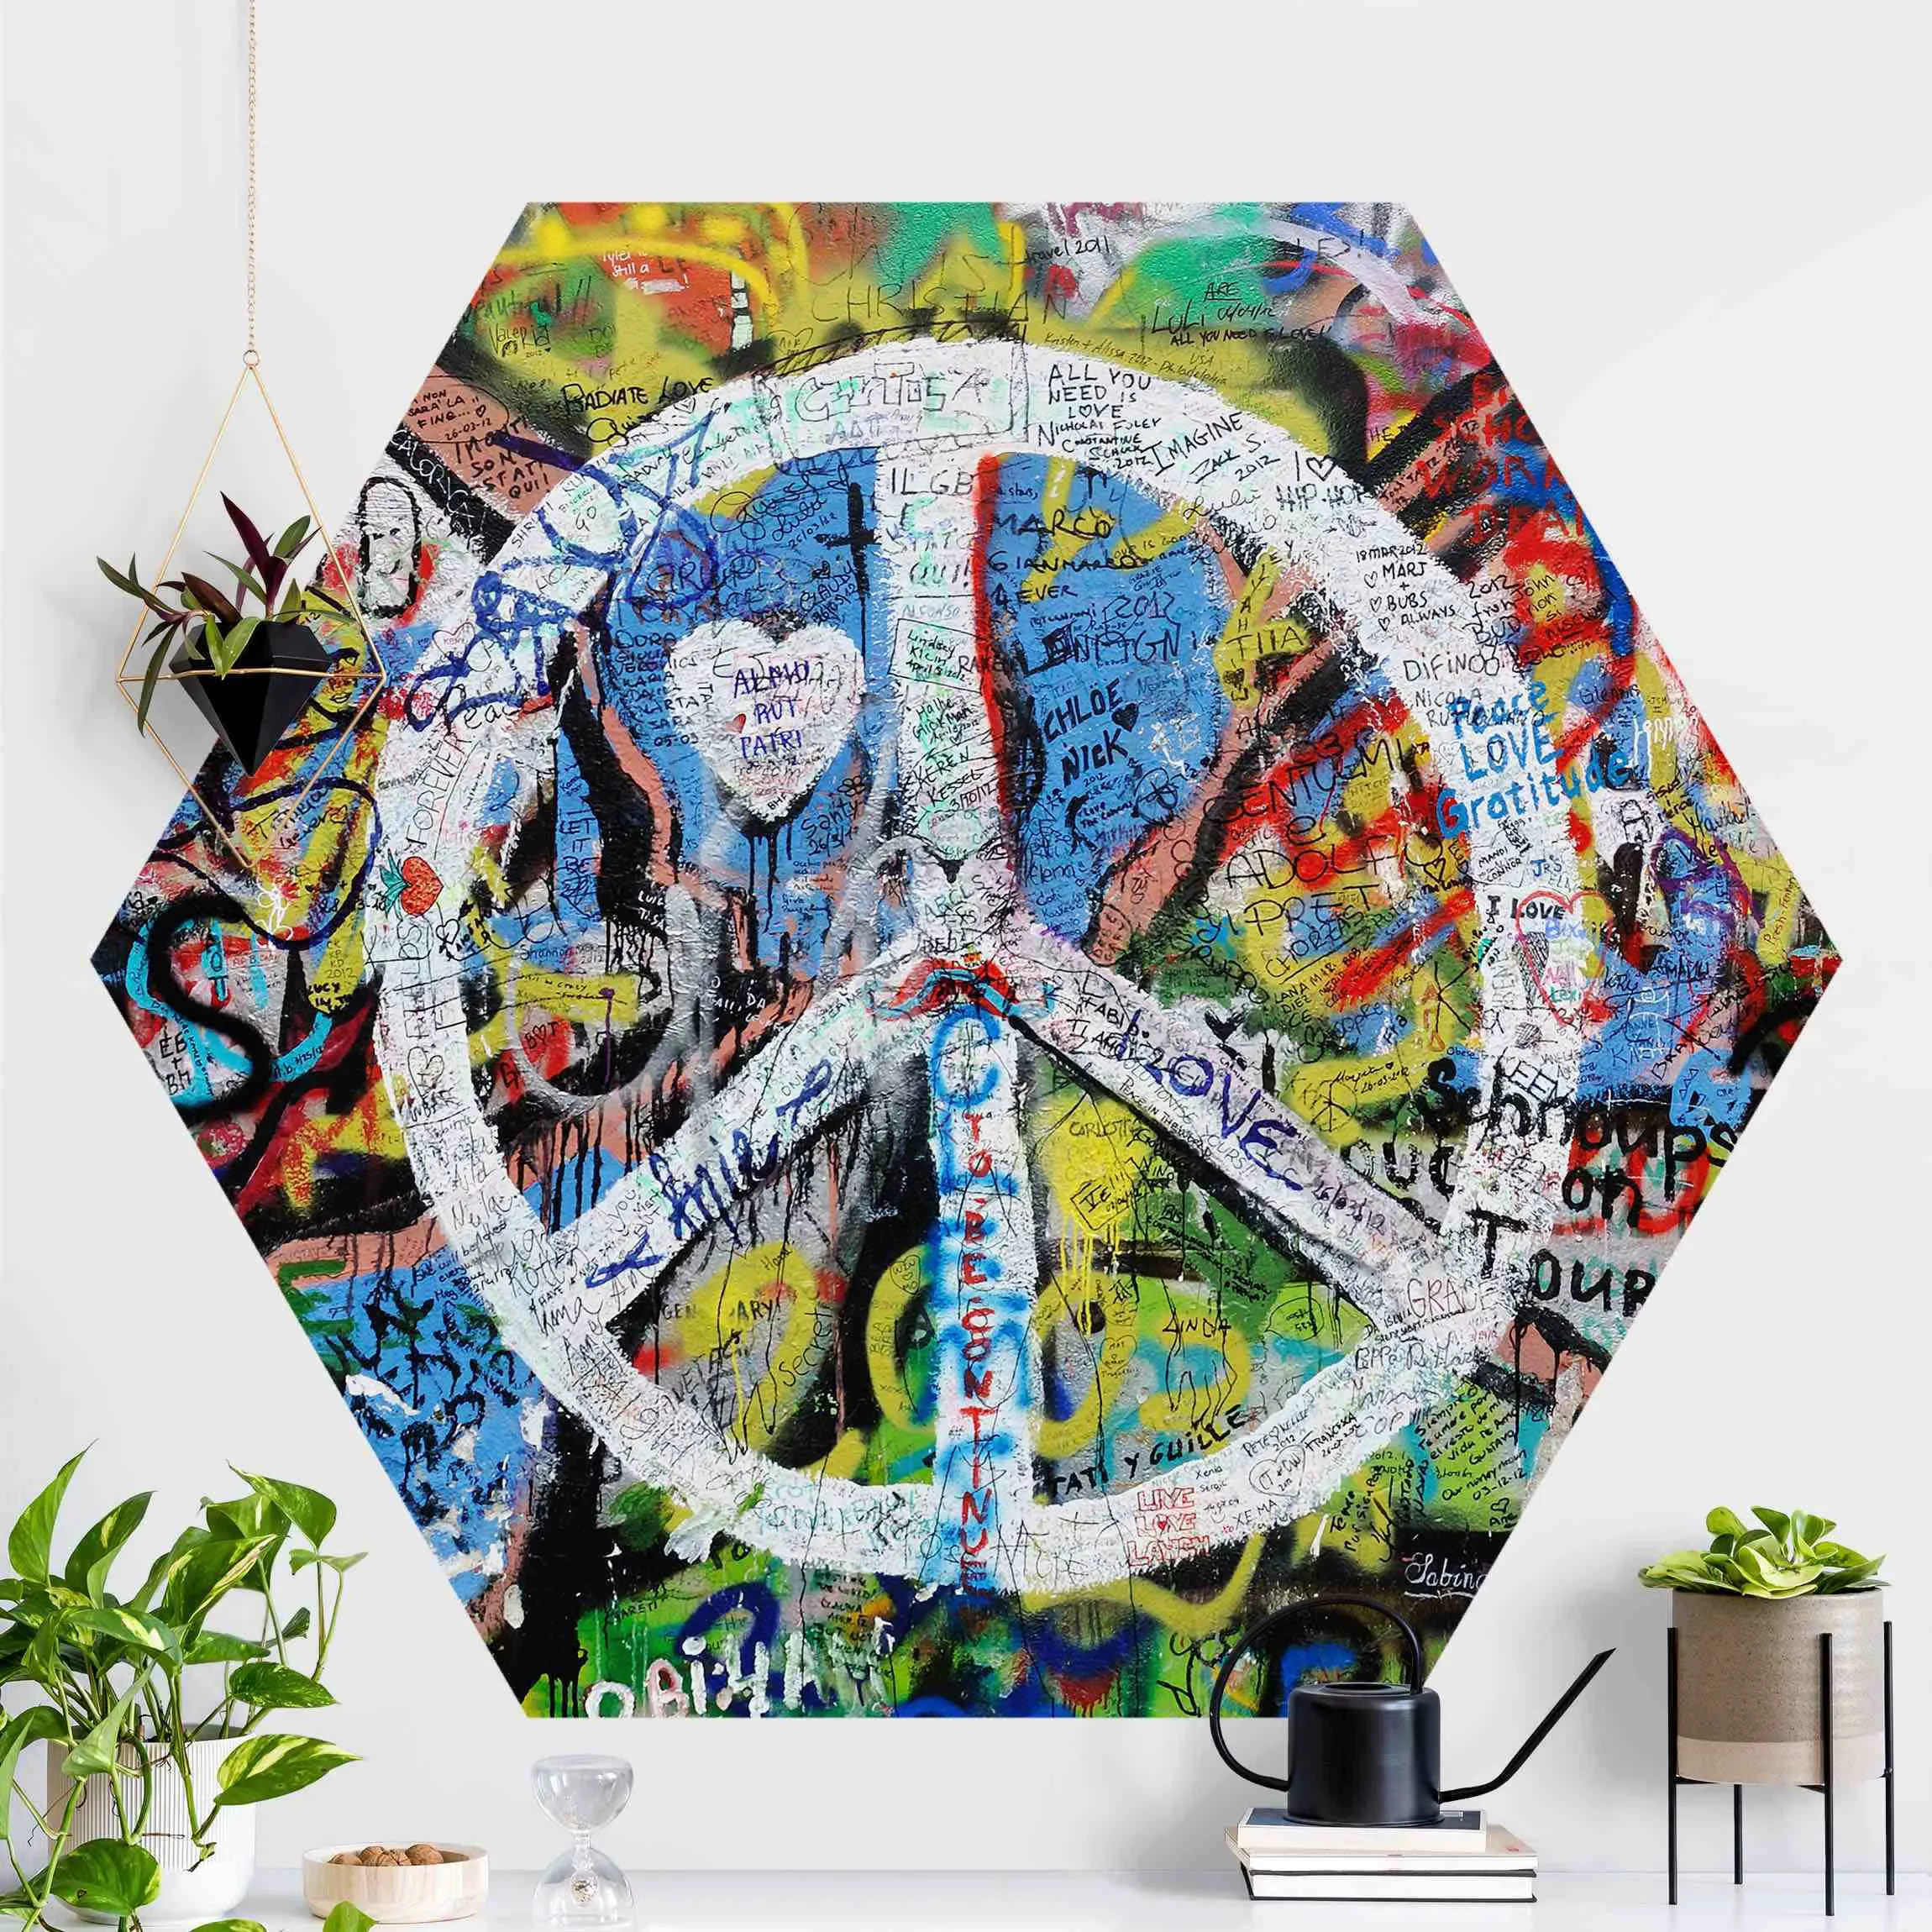 Hexagon Mustertapete selbstklebend Graffiti Wall Peace Sign günstig online kaufen